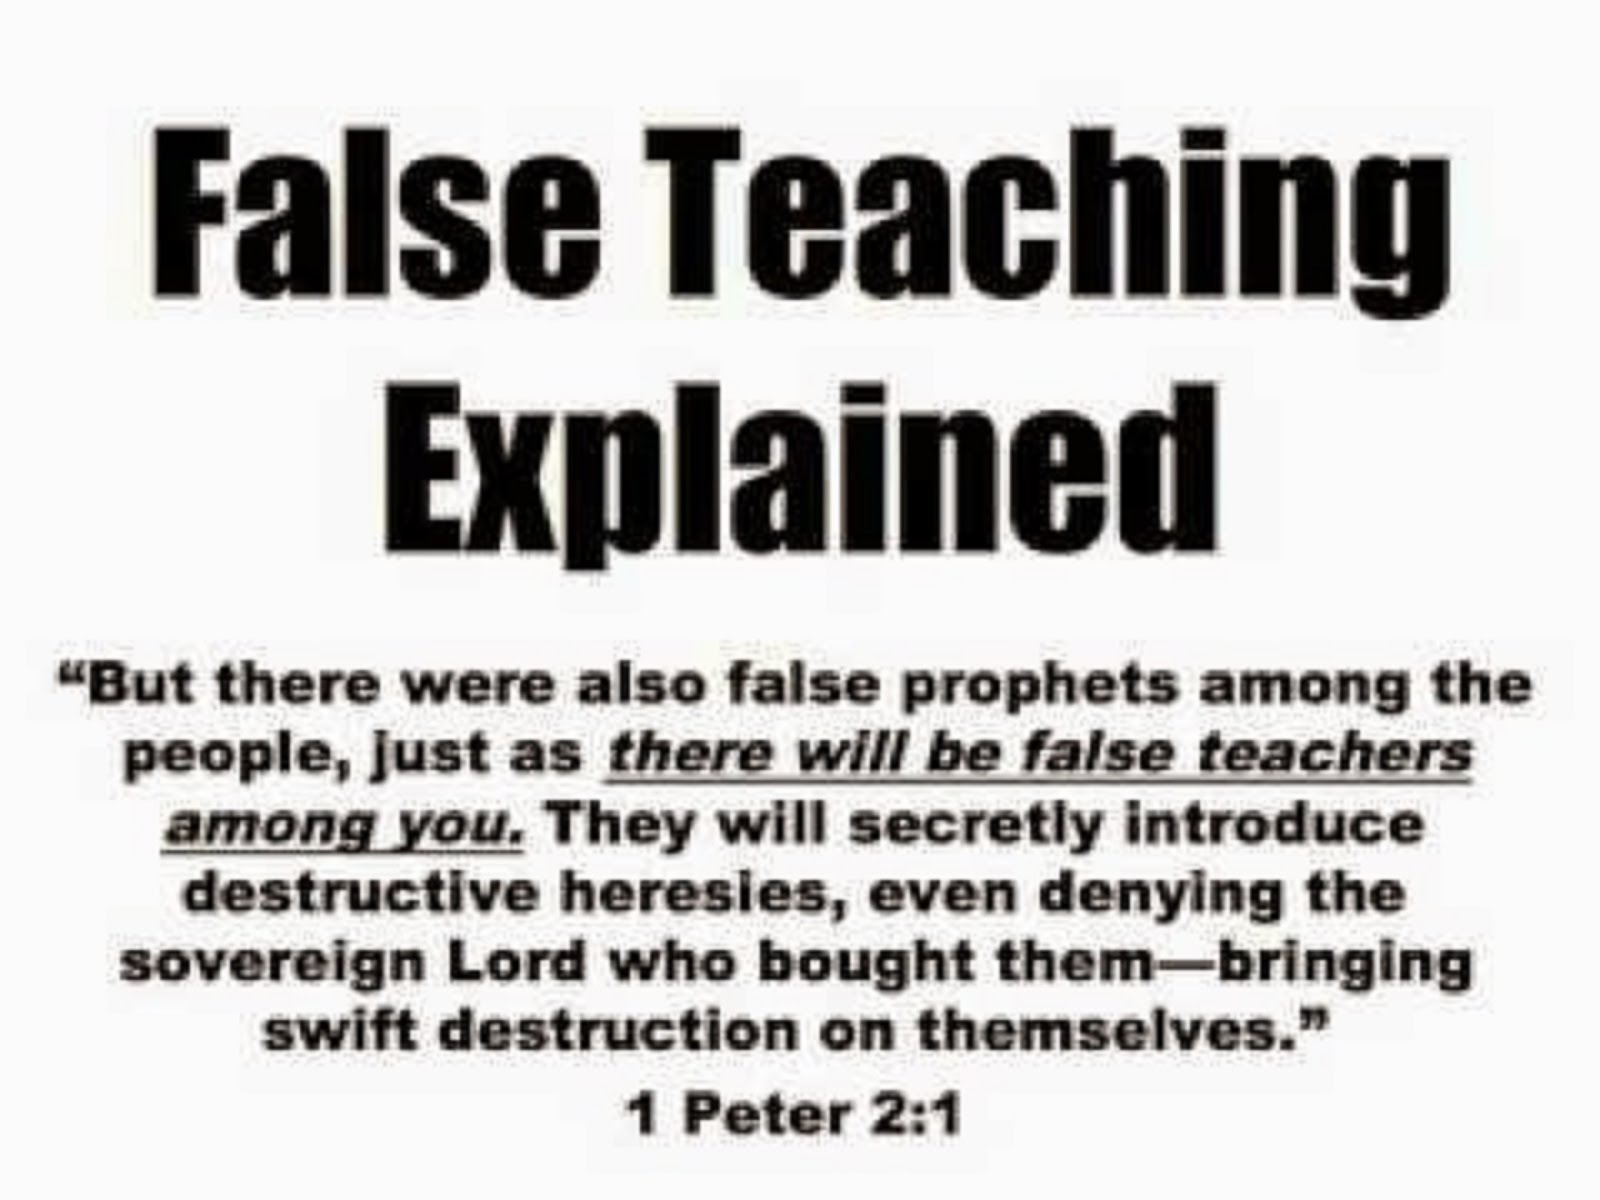 FALSE TEACHINGS EXPLAINED